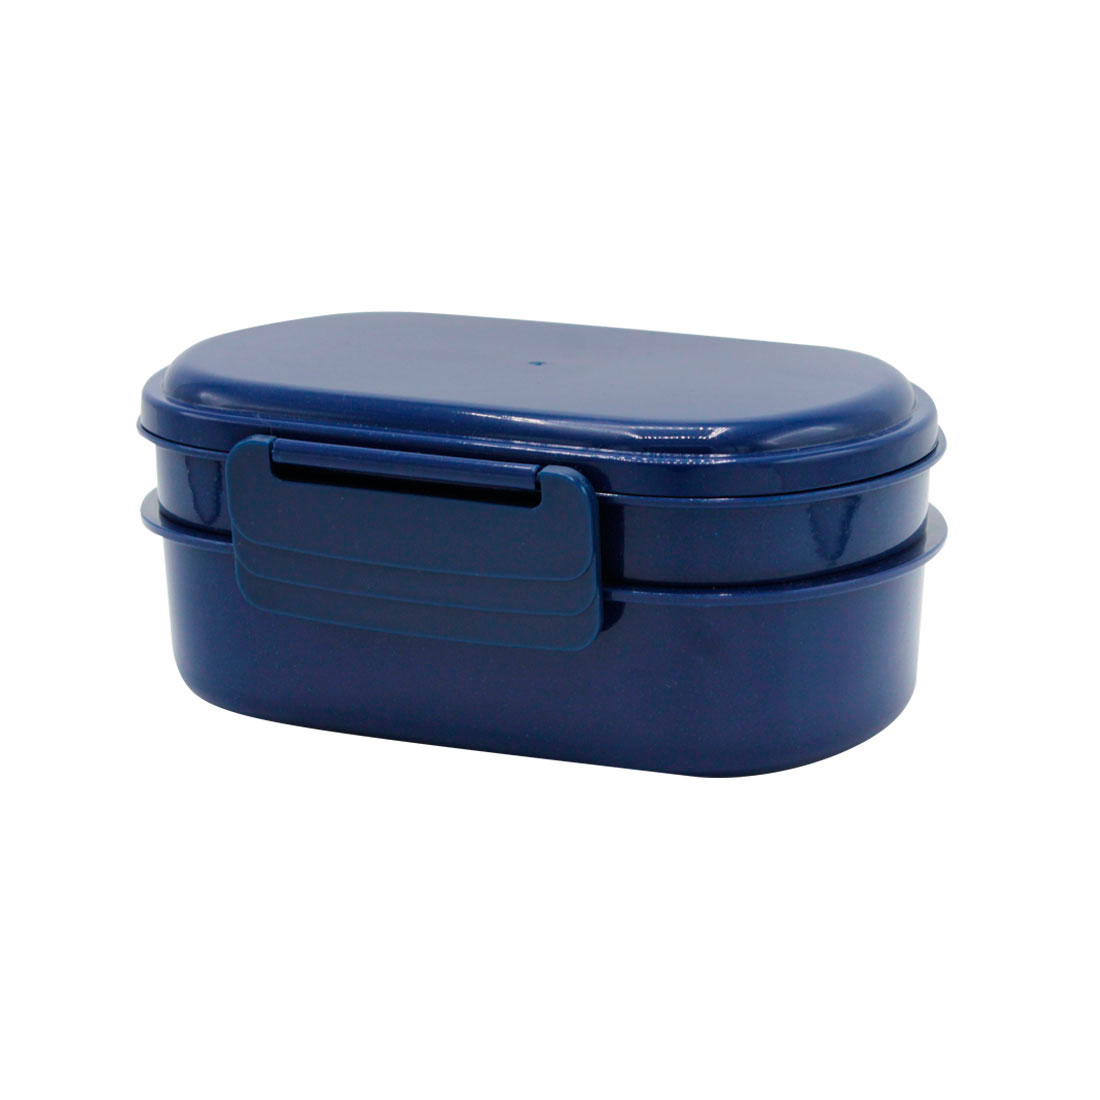 Ланчбокс (контейнер для еды) Grano, синий (Фото)